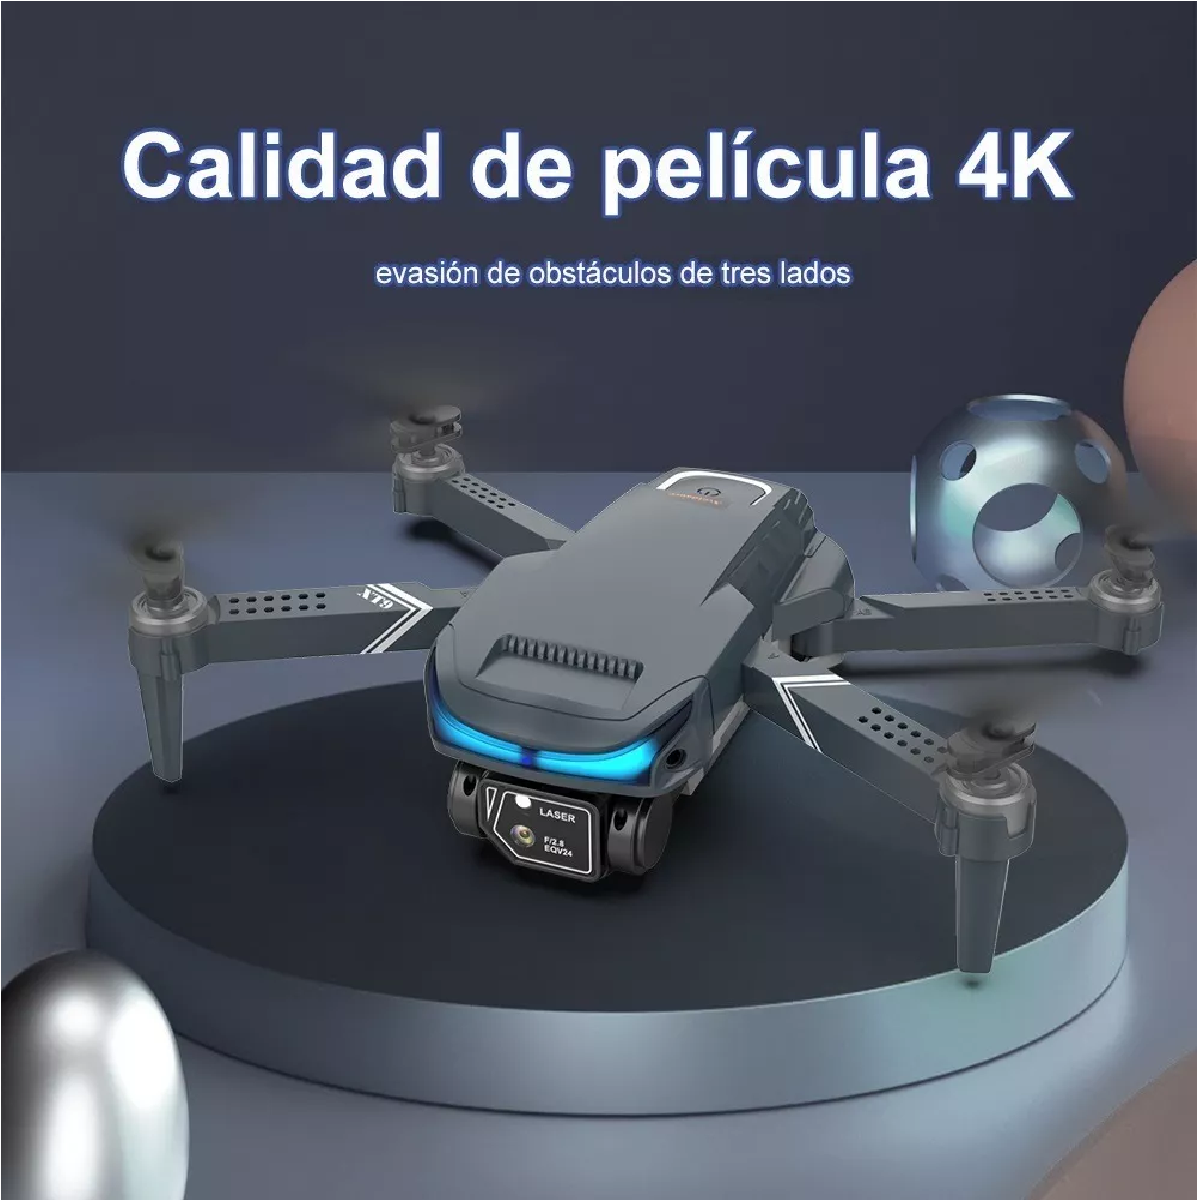 Djl Mini Drone, Cámara 4k Hd con juguete plegable Quadcopter